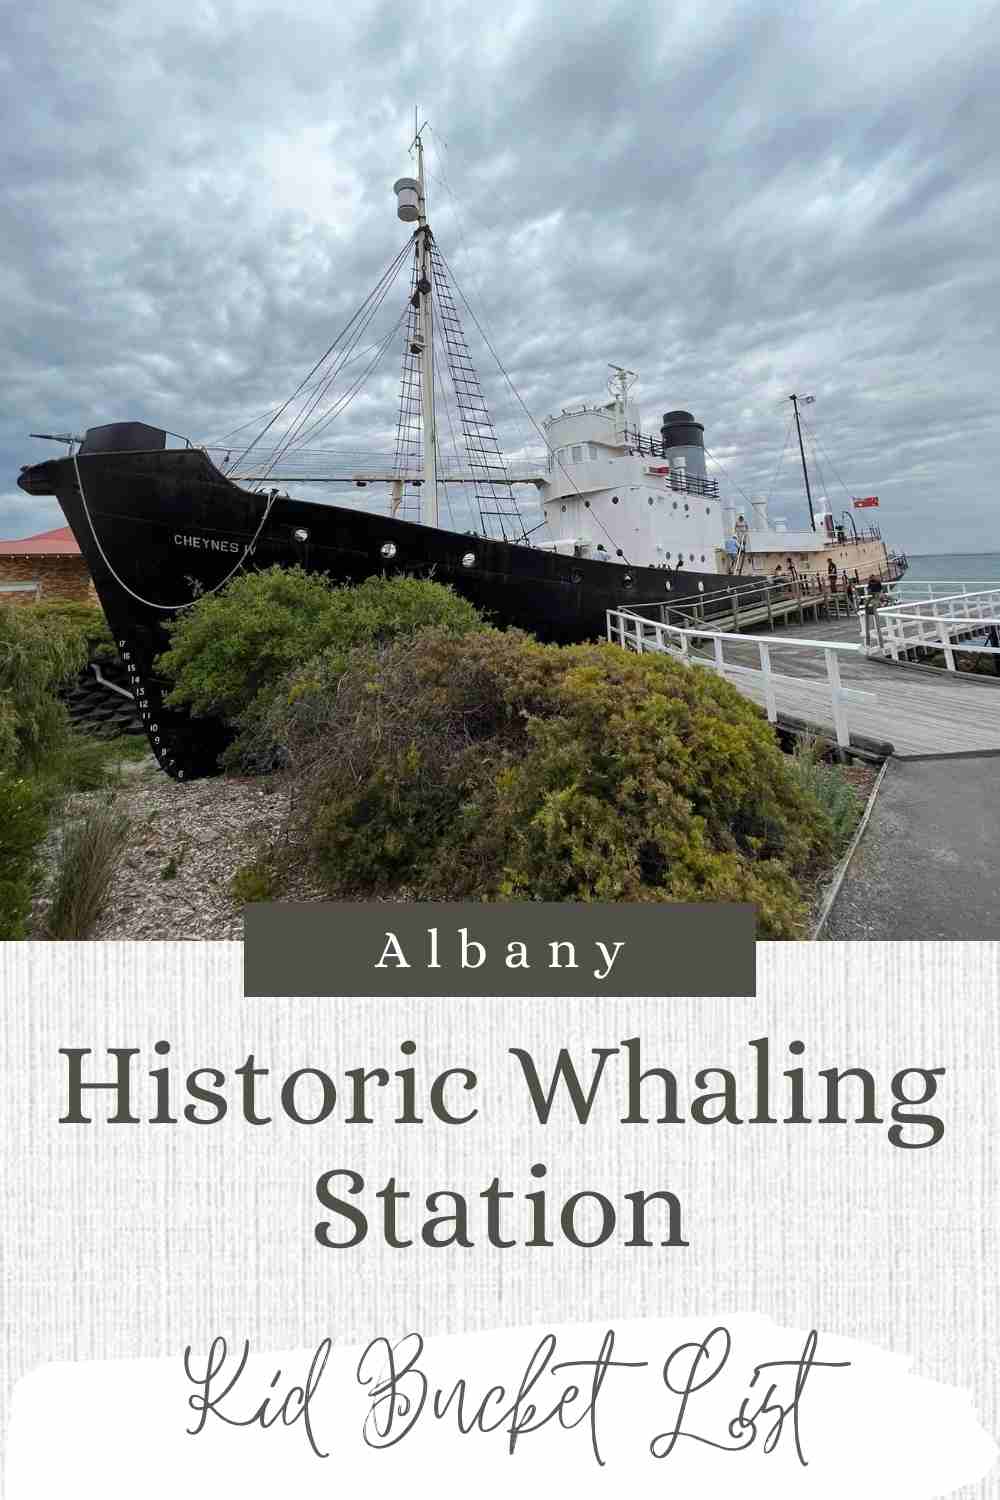 Pinterest Visit Albany's Historic Whaling Station